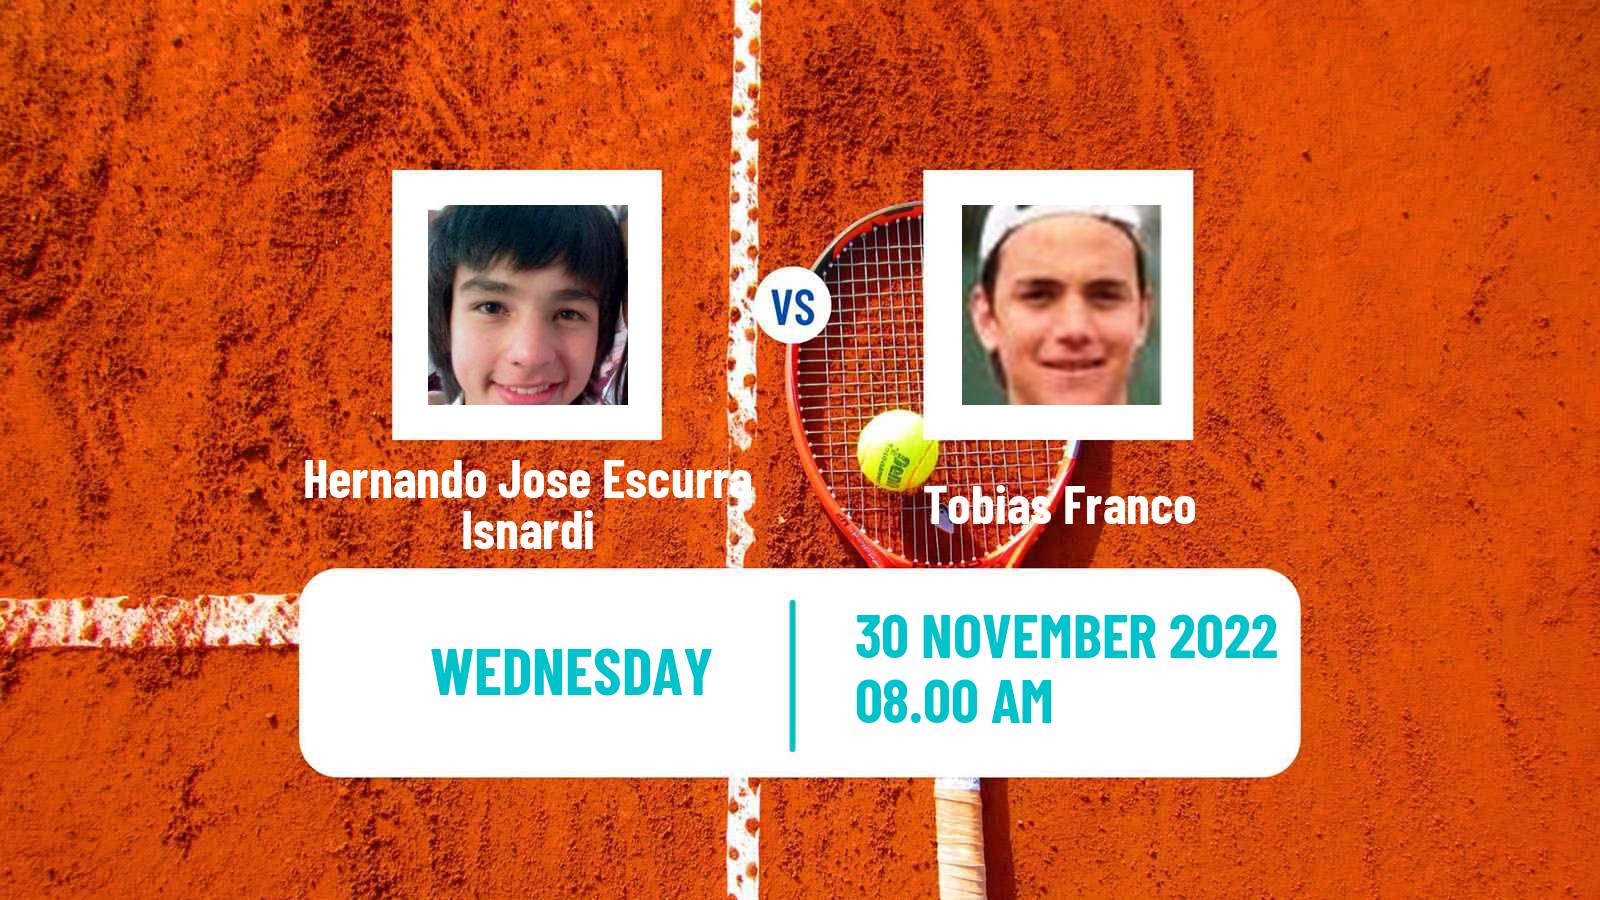 Tennis ITF Tournaments Hernando Jose Escurra Isnardi - Tobias Franco